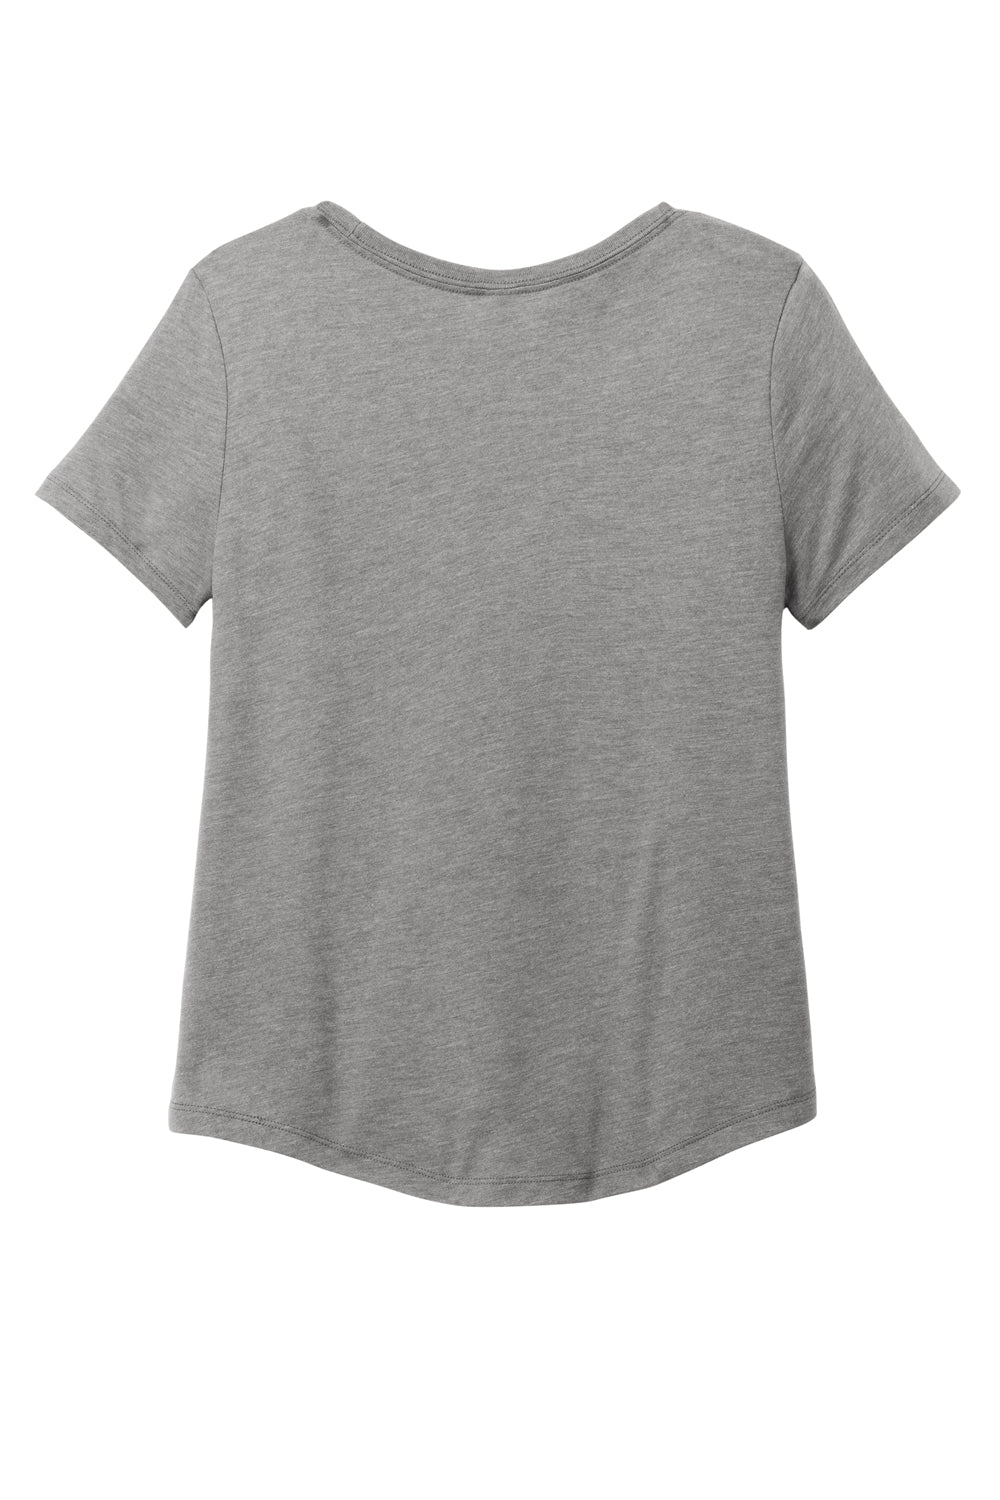 Allmade AL2015 Womens Short Sleeve Scoop Neck T Shirt Aluminum Grey Flat Back